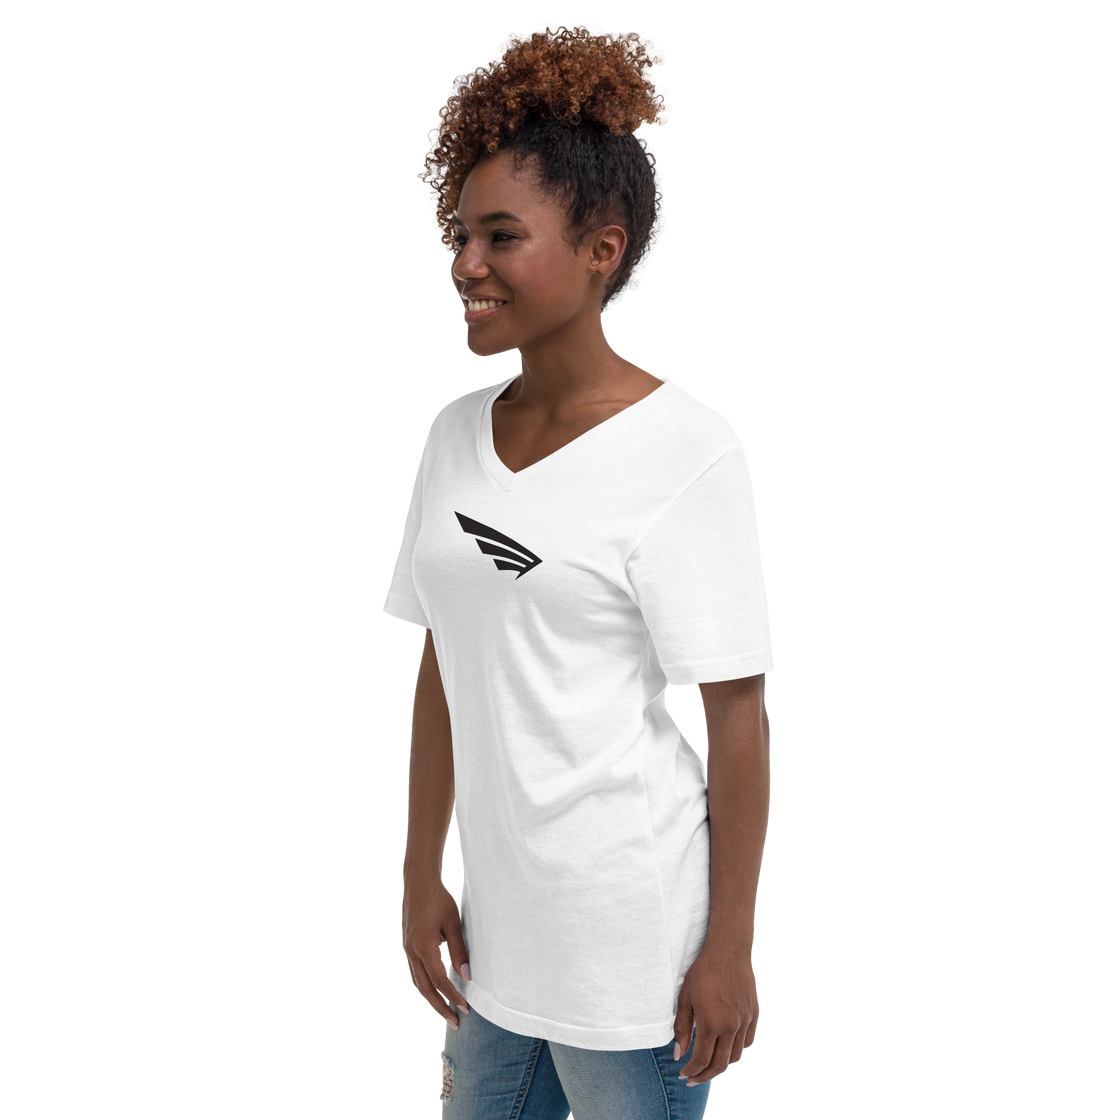 FLY³ Short Sleeve V-Neck T-Shirt | Flycube